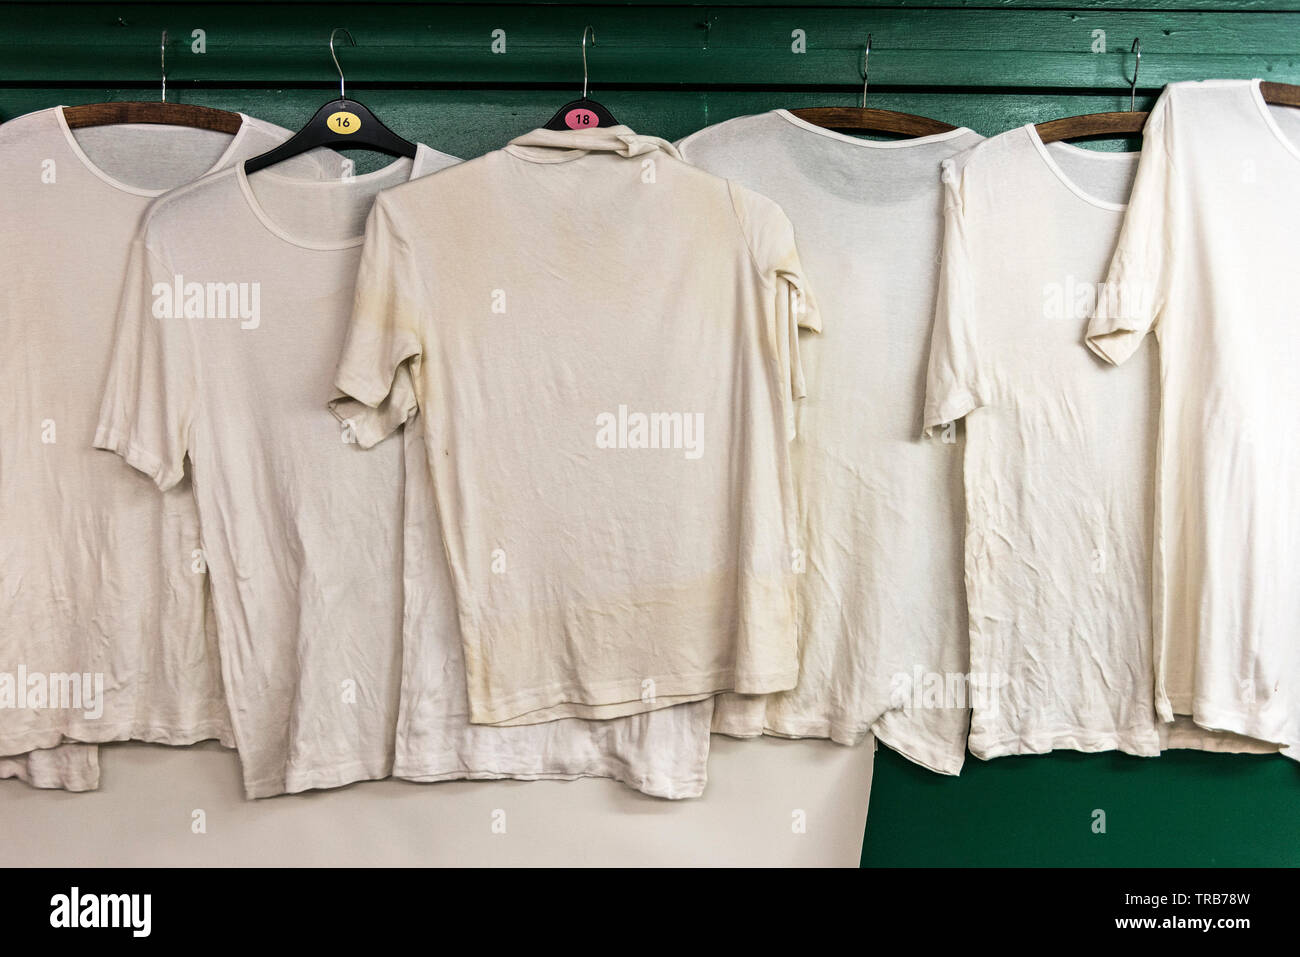 https://c8.alamy.com/comp/TRB78W/old-worn-white-t-shirts-on-hangers-TRB78W.jpg